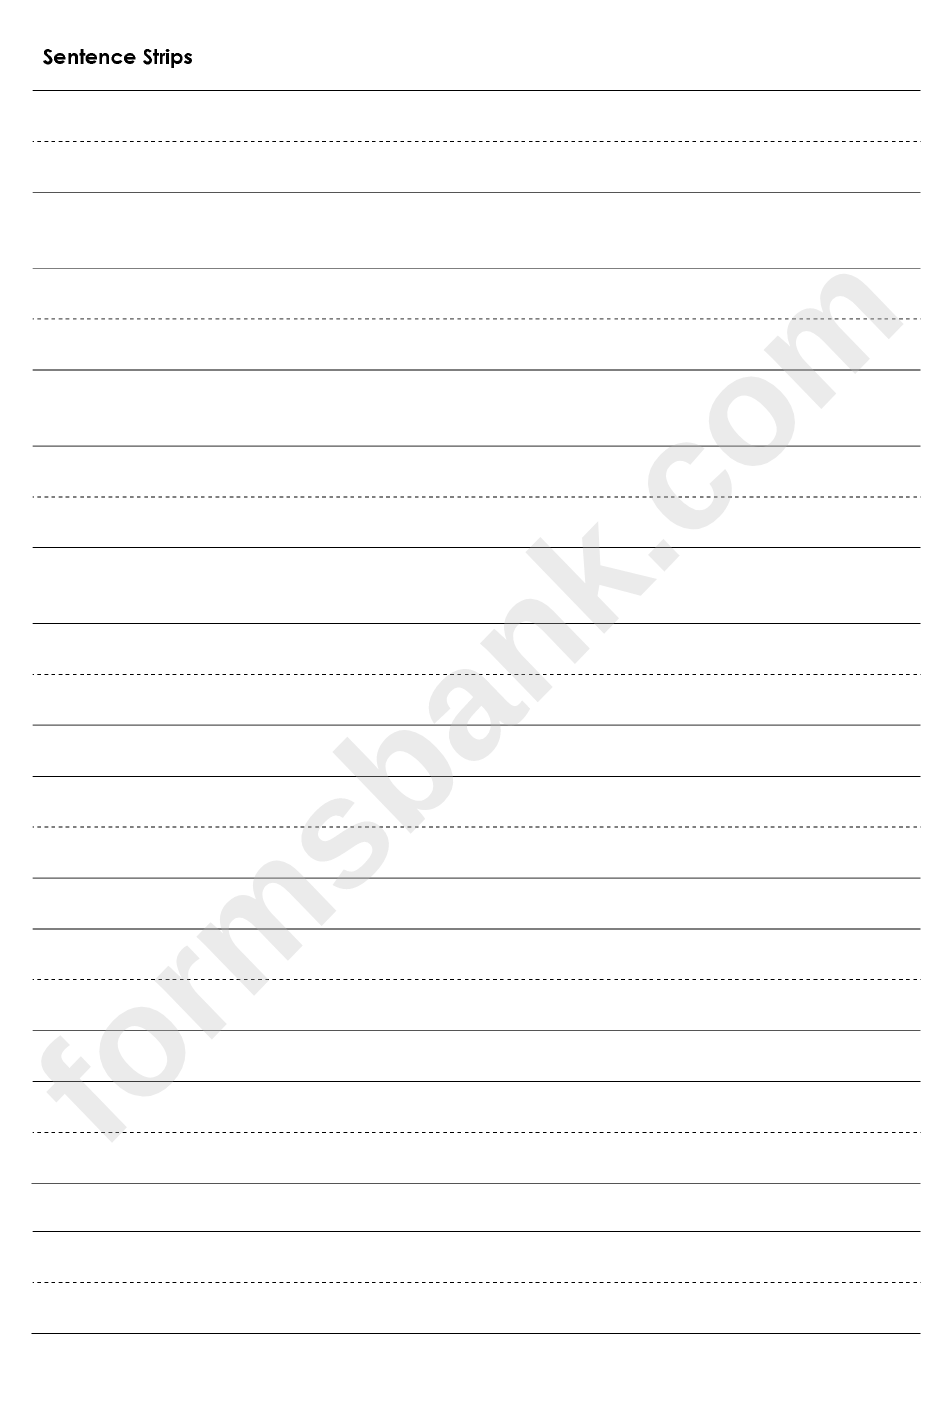 sentence-strips-paper-template-printable-pdf-download